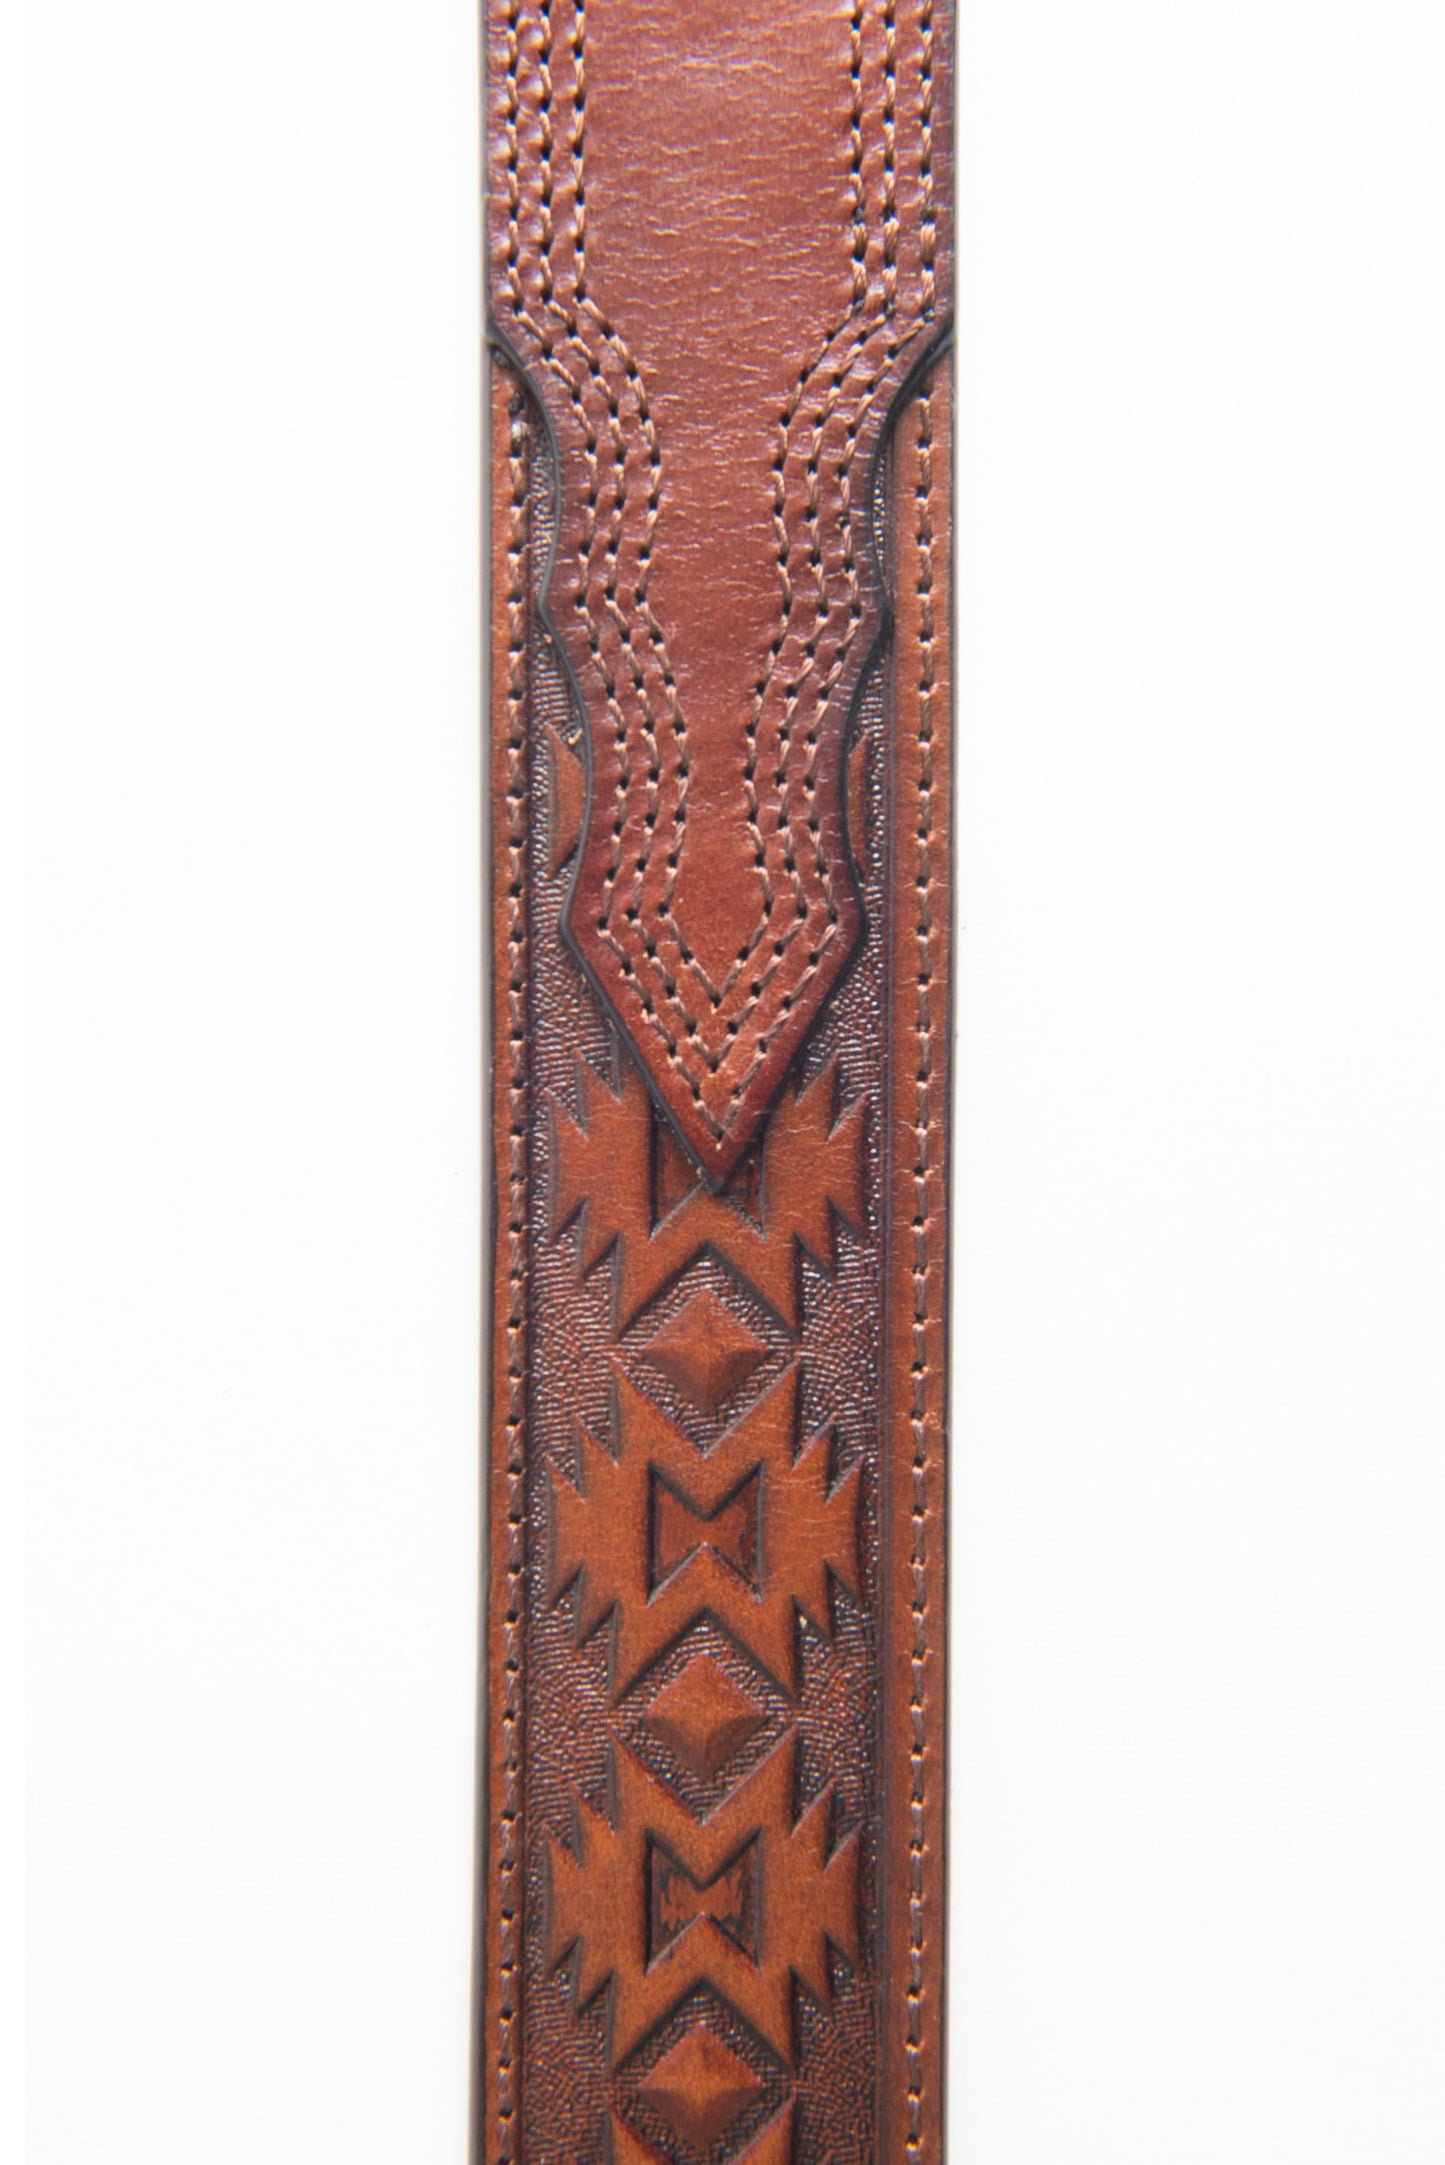 Genuine Leather Aztec Textured Buckle Belt - Brown